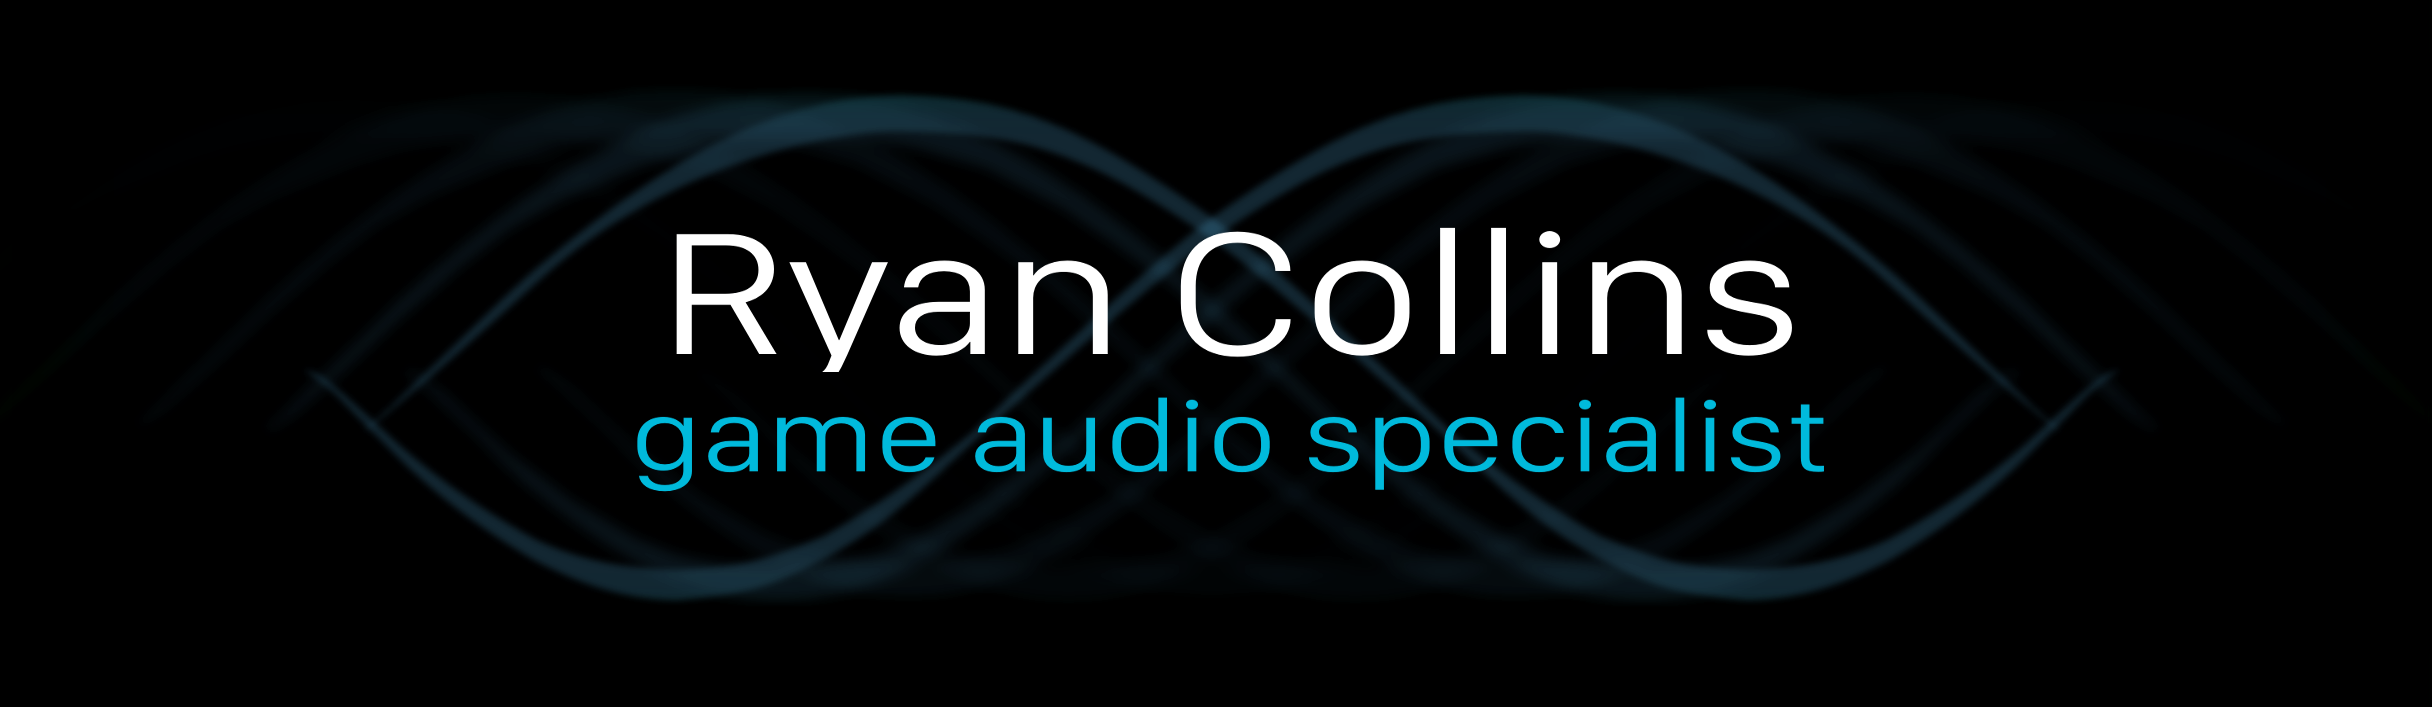 Ryan Collins - Game Audio Specialist